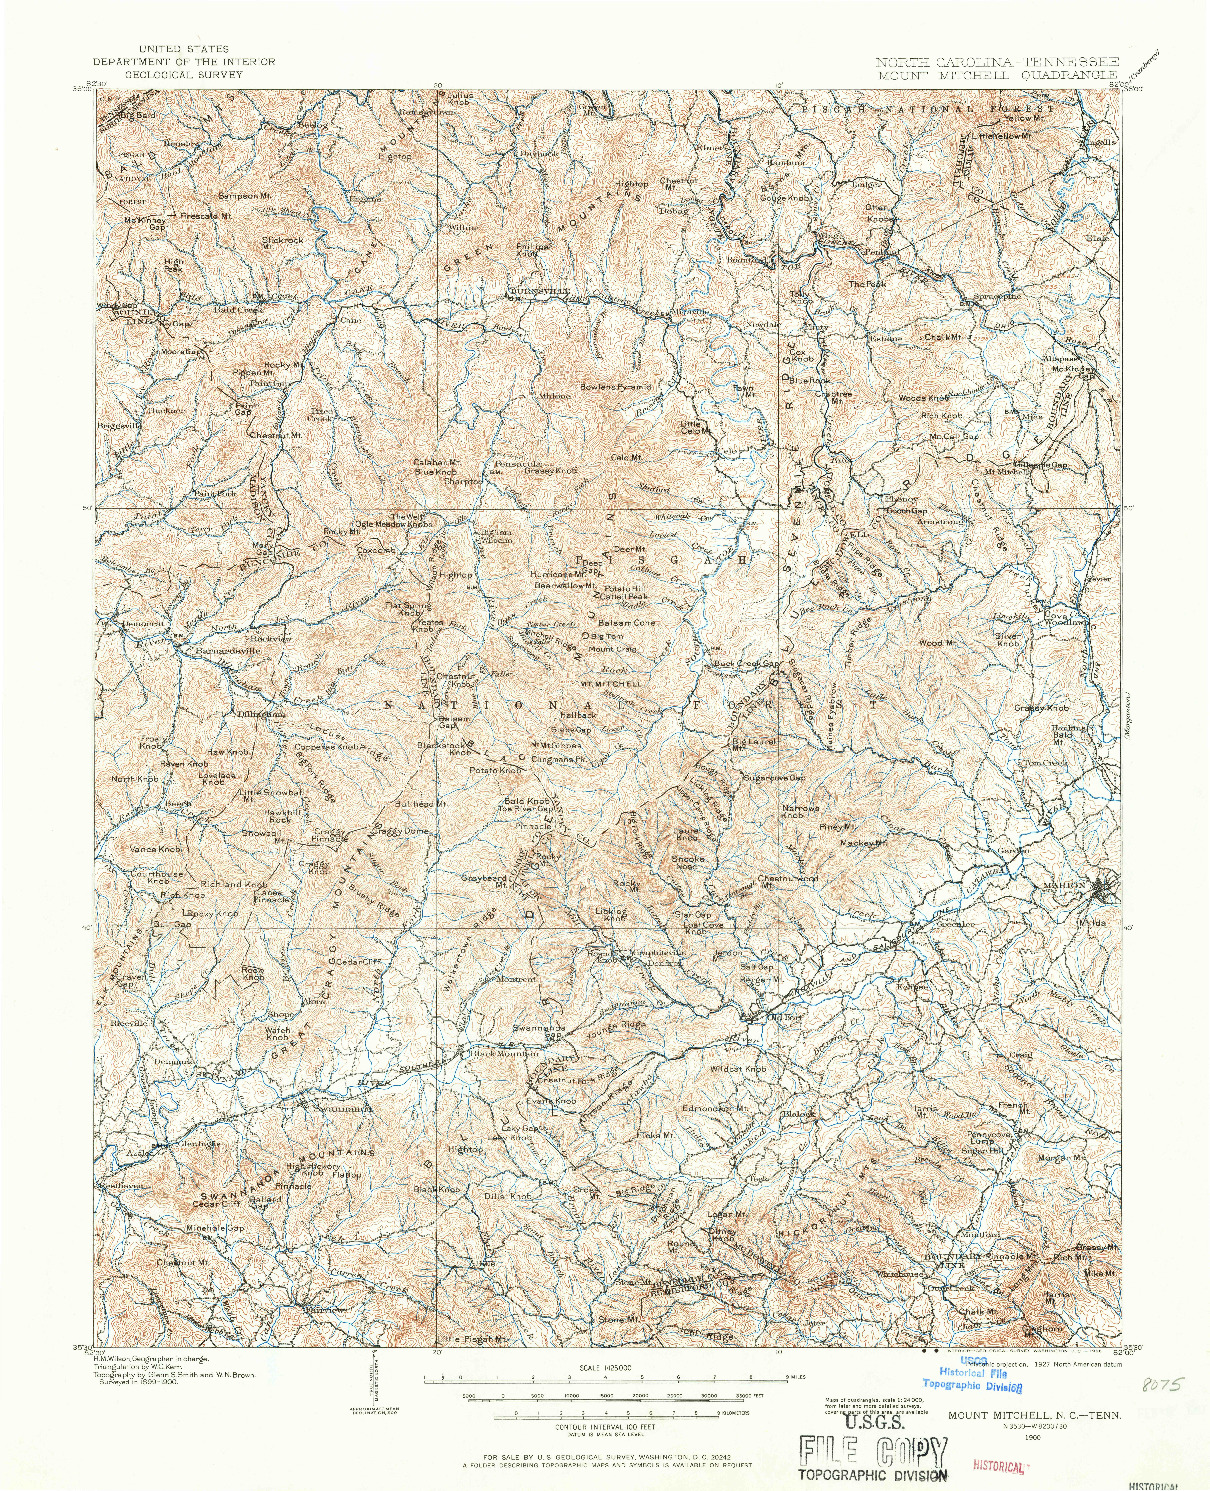 USGS 1:125000-SCALE QUADRANGLE FOR MOUNT MITCHELL, NC 1900